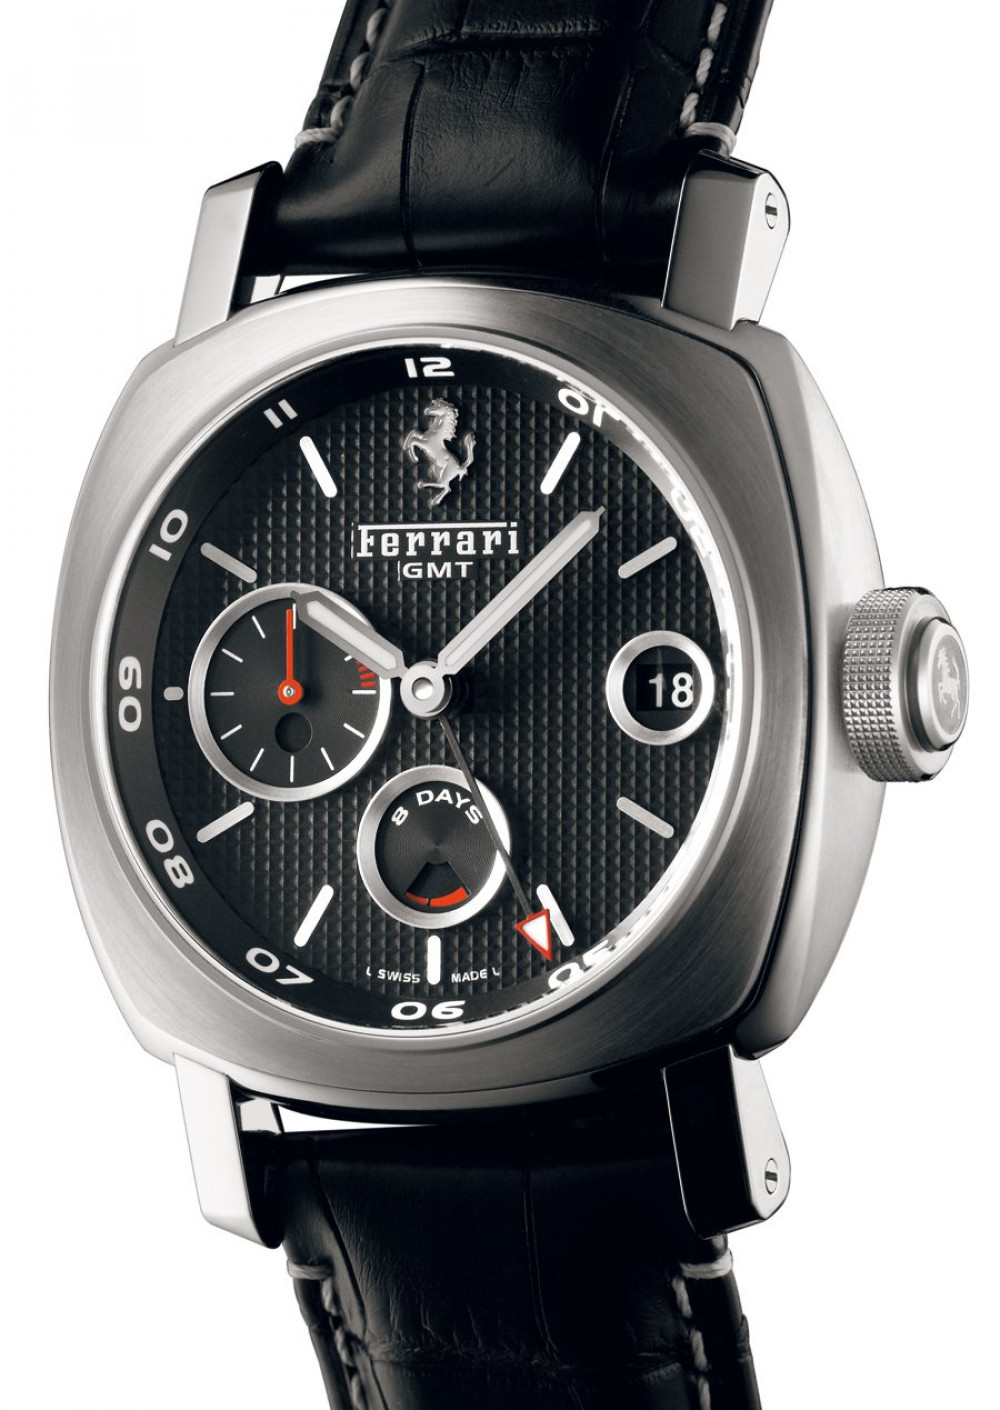 Zegarek firmy Ferrari - Engineered by Officine Panerai, model Granturismo 8 Days GMT